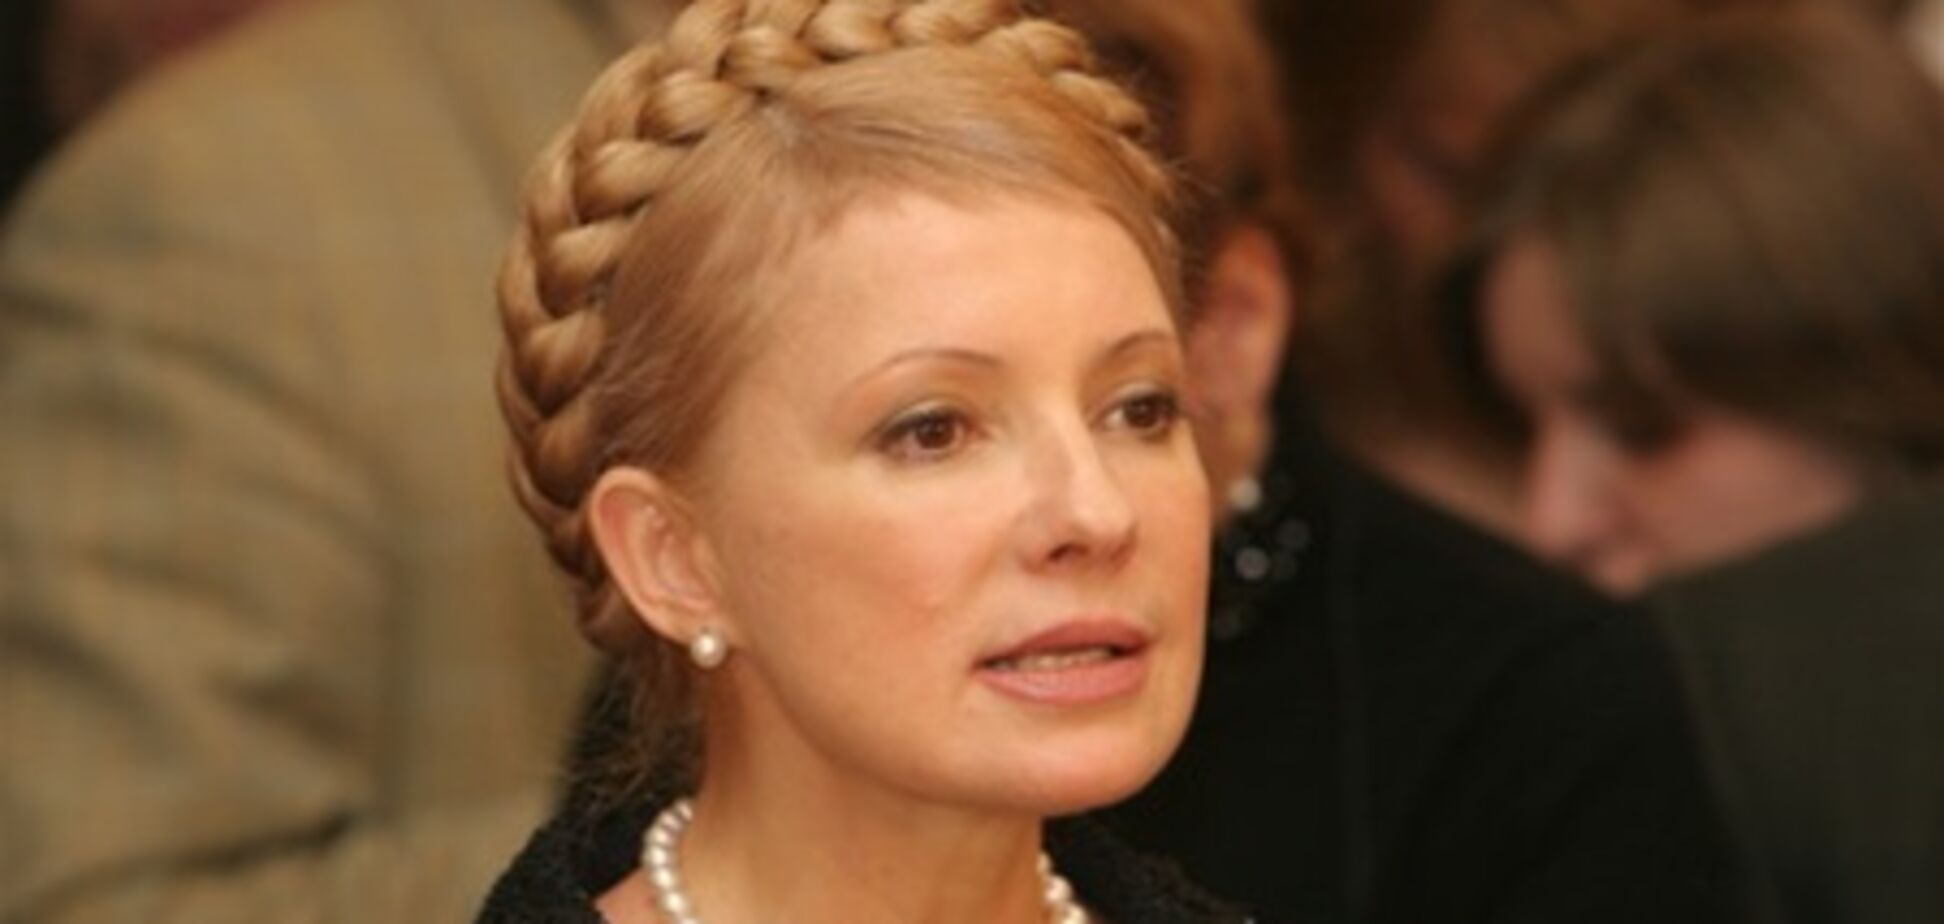 ПР: Тимошенко связана по рукам и ногам